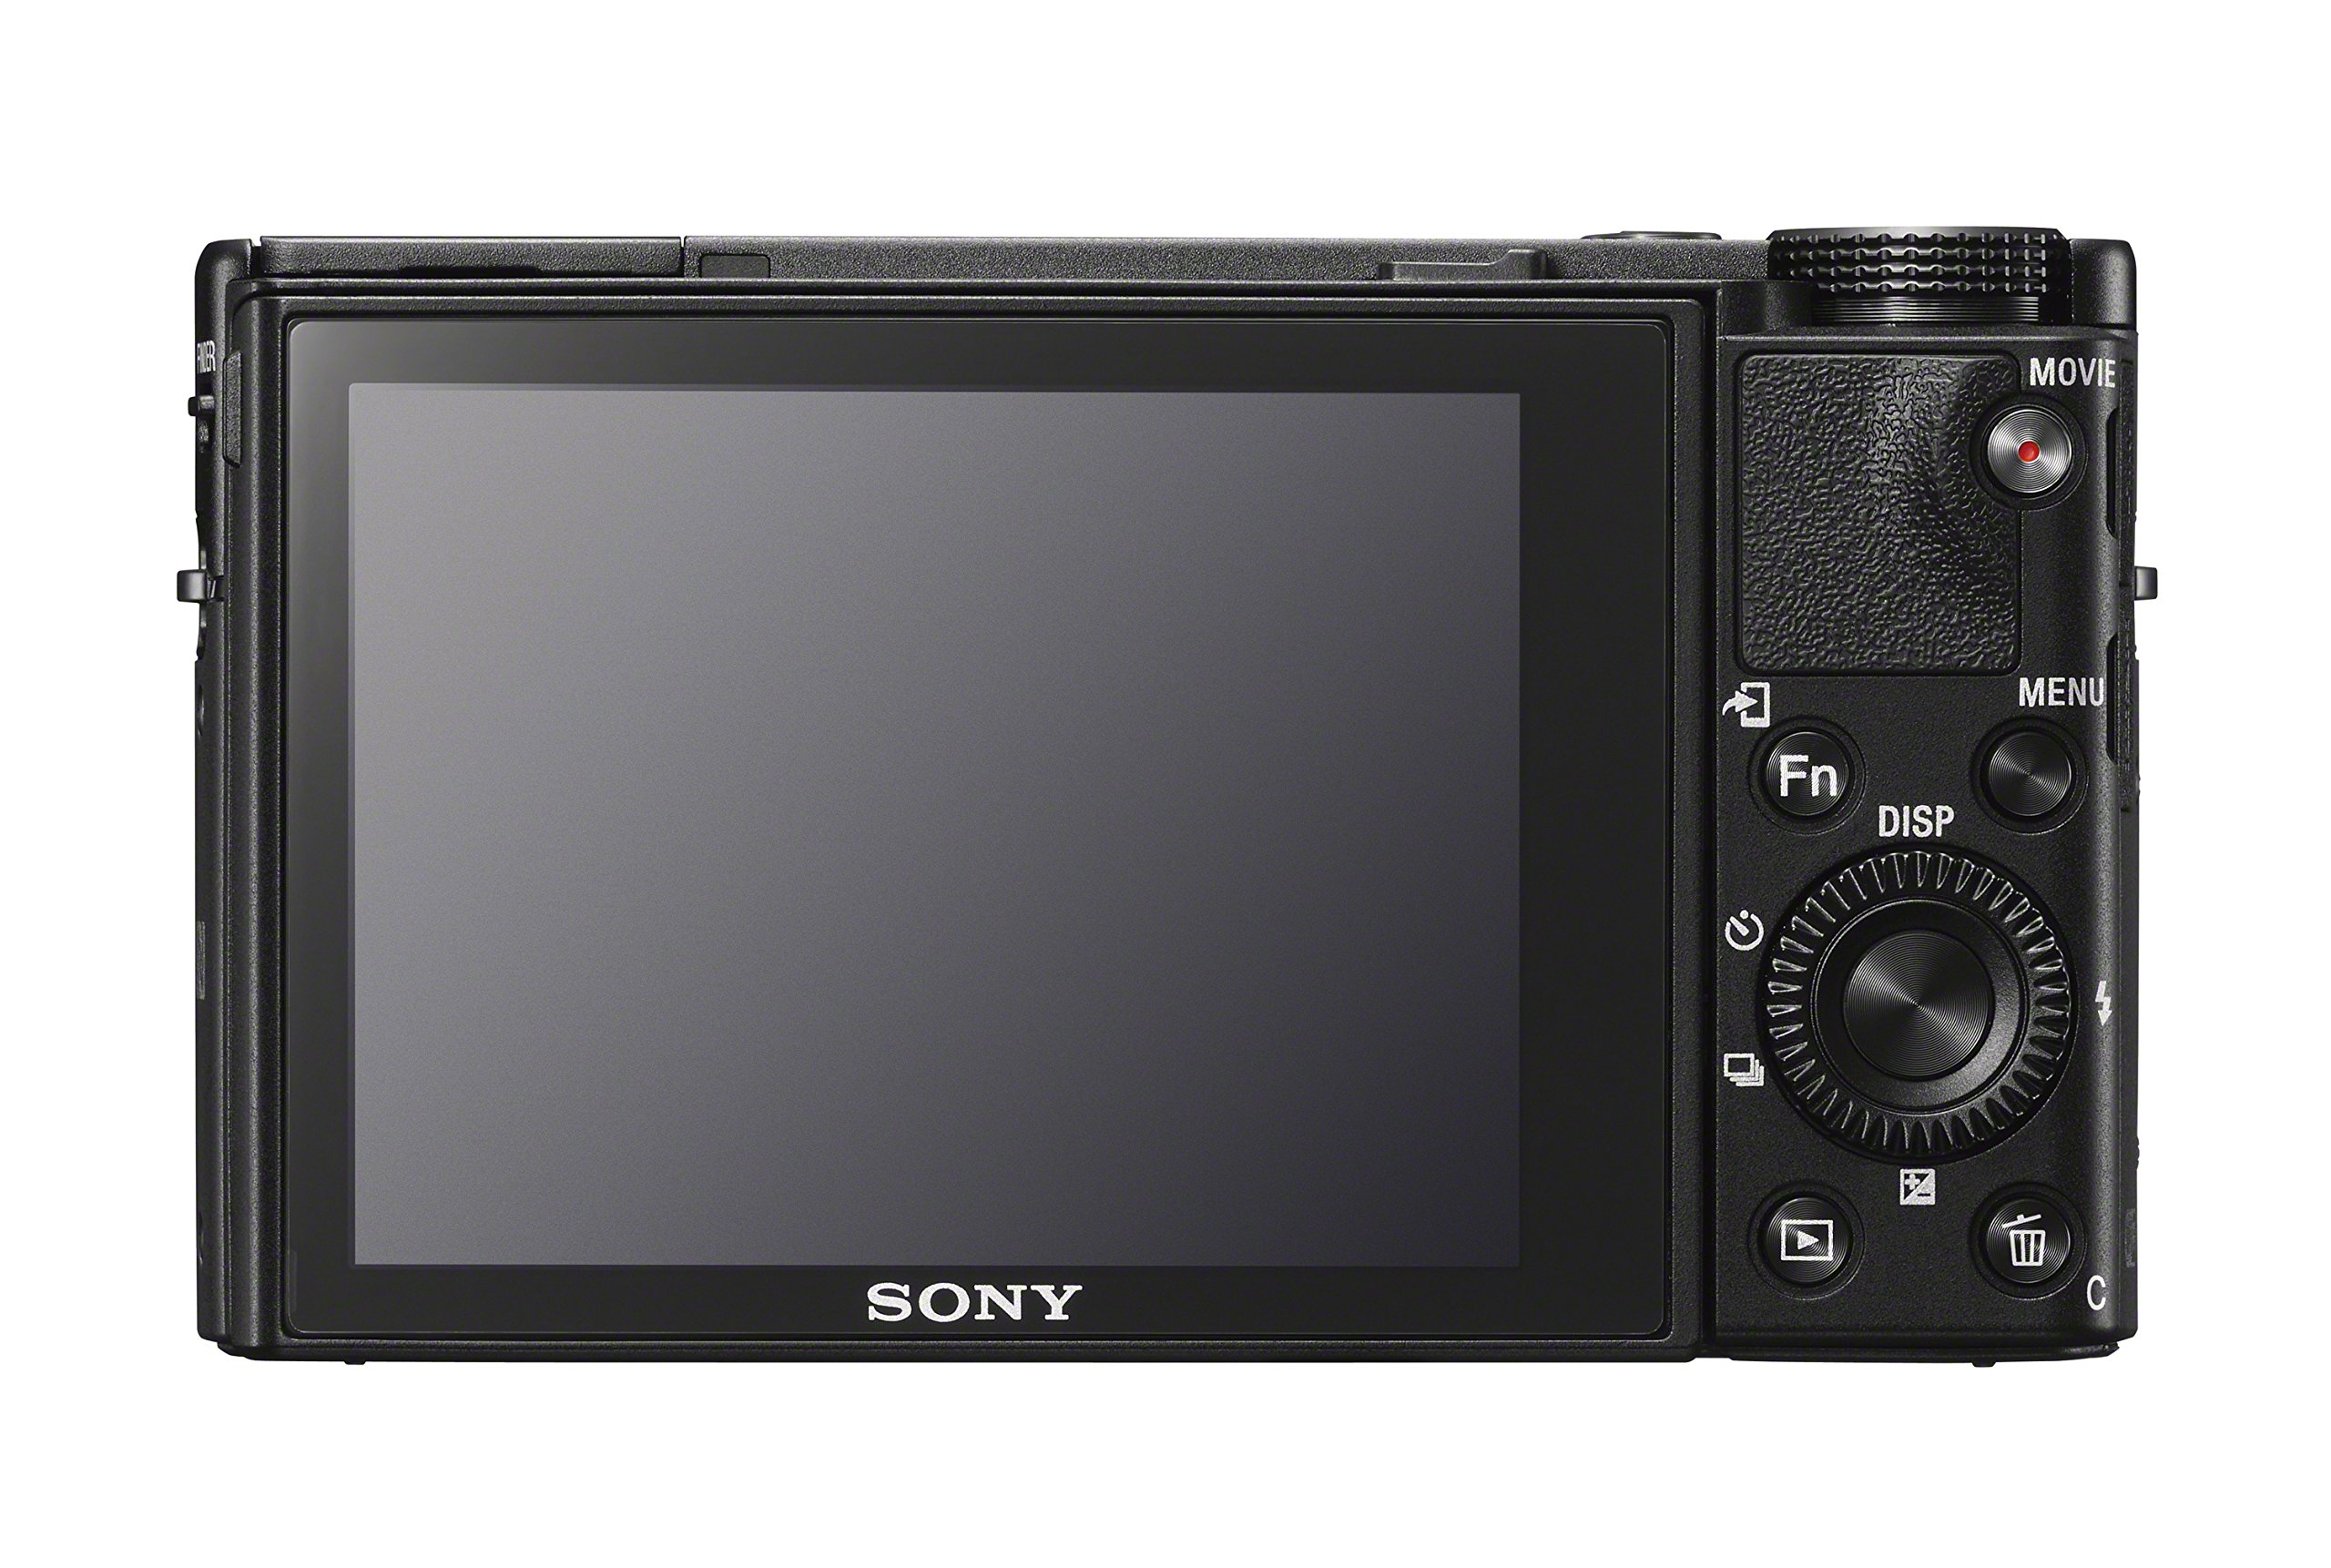 Sony RX100VA (NEWEST VERSION) 20.1MP Digital Camera: RX100 V Cyber-shot Camera with Hybrid 0.05 AF, 24fps Shooting Speed & Wide 315 Phase Detection - 3” OLED Viewfinder & 24-70mm Zoom Lens - Wi-Fi